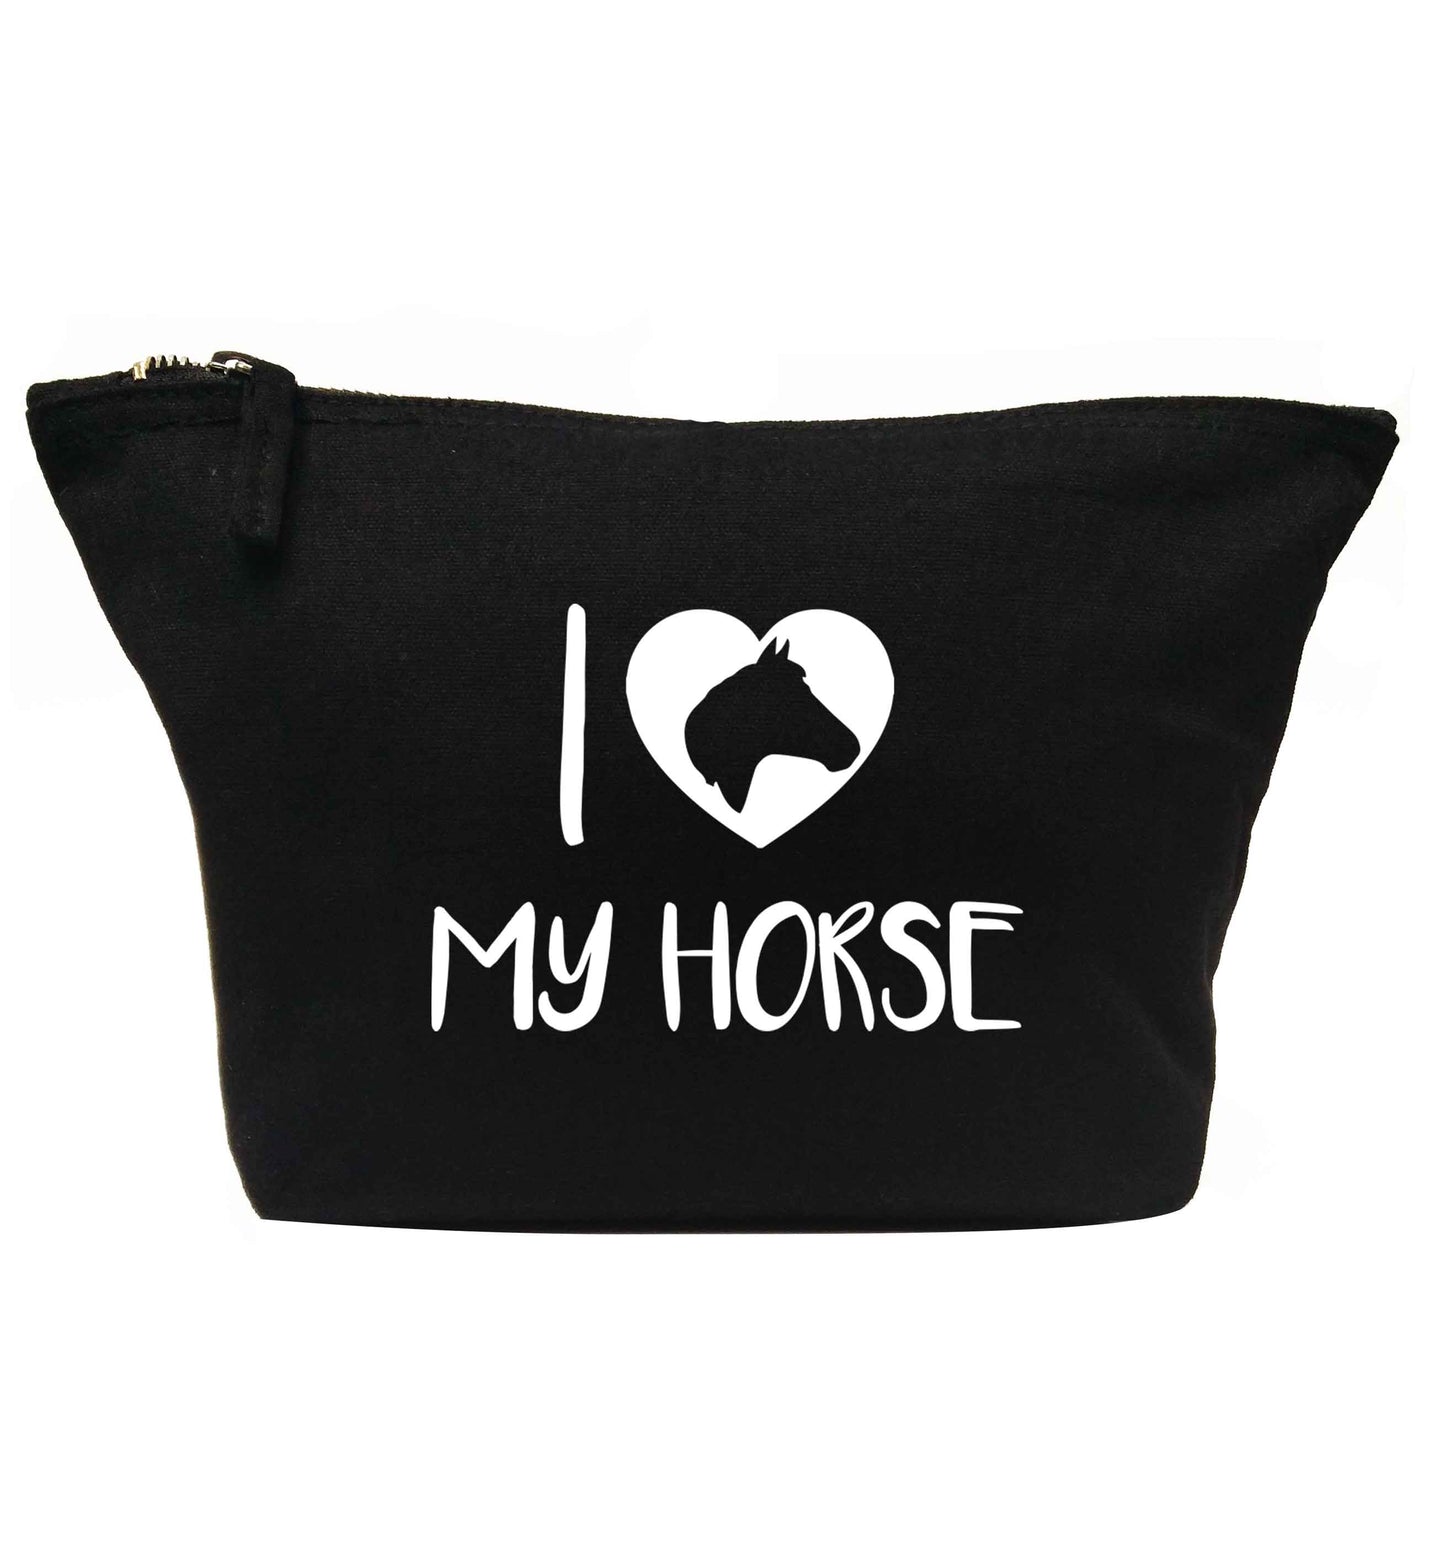 I love my horse | Makeup / wash bag